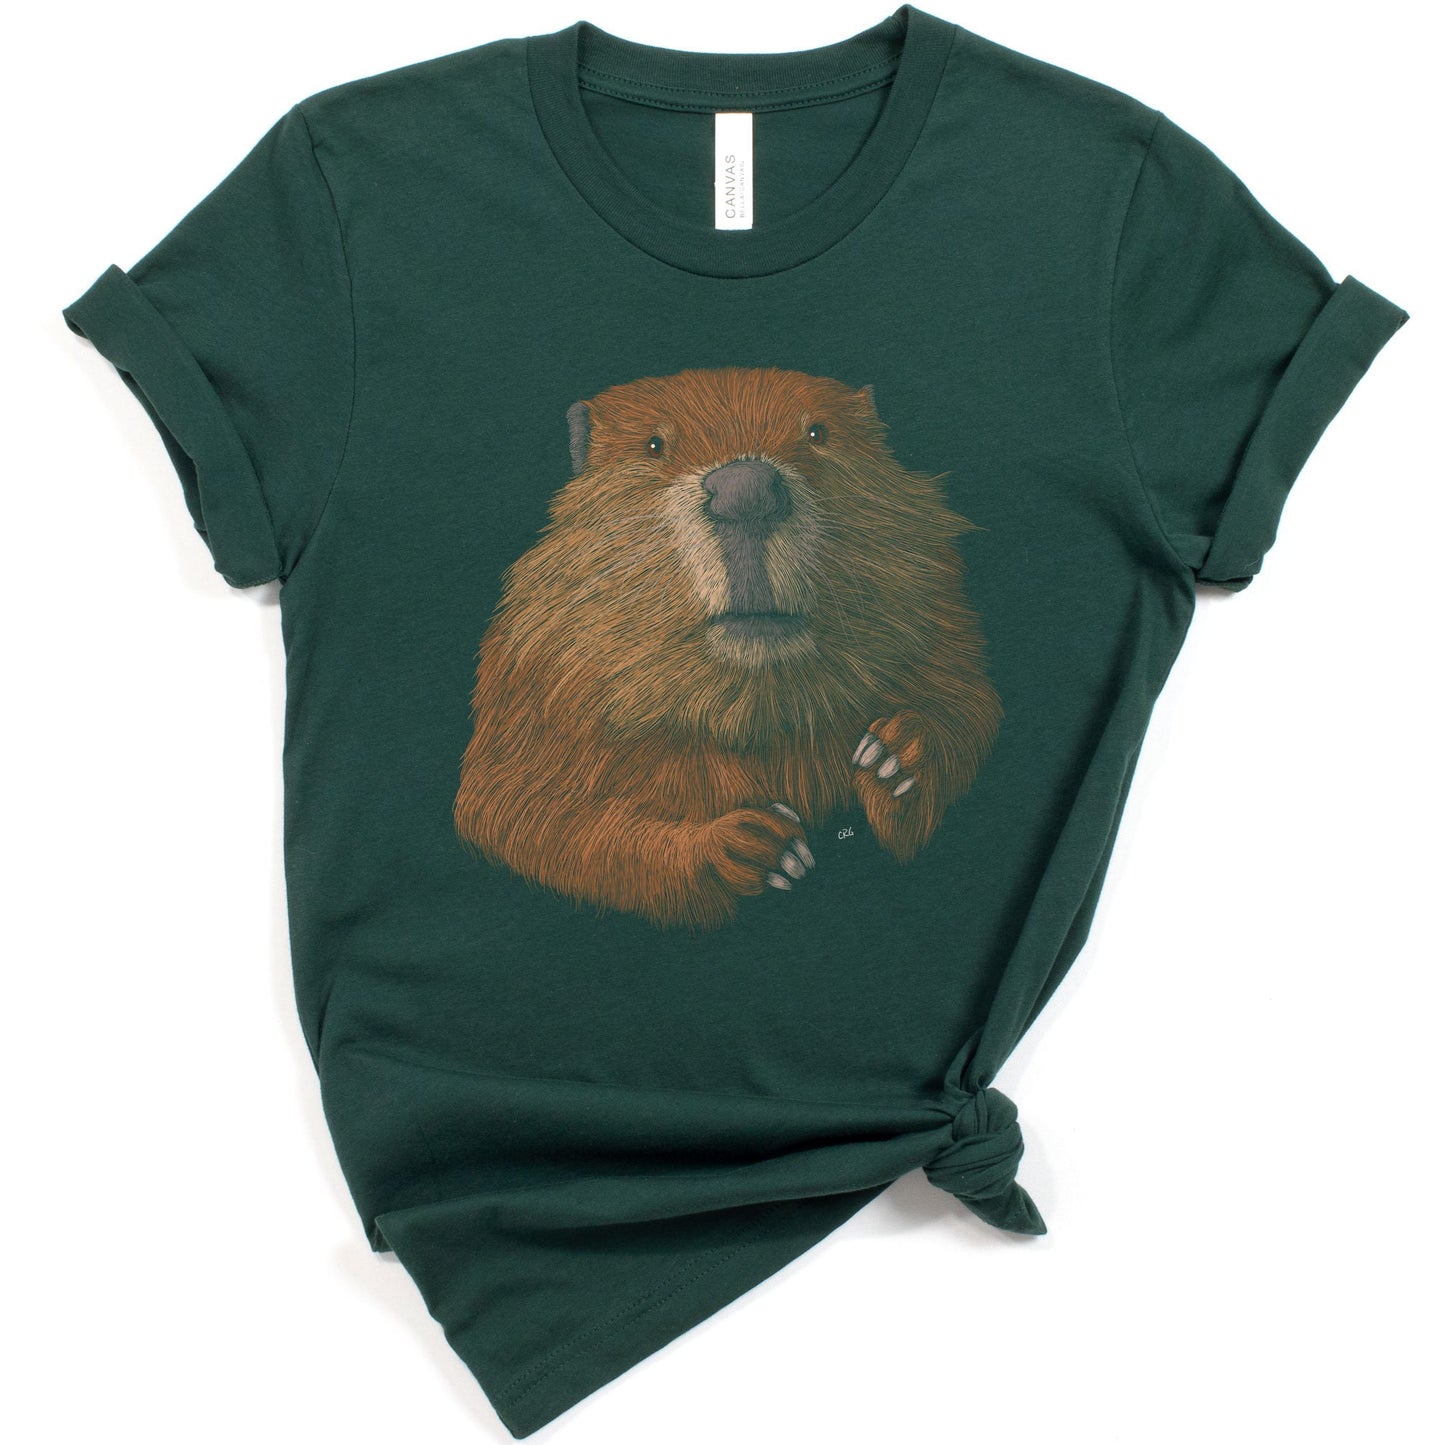 Beaver Shirt